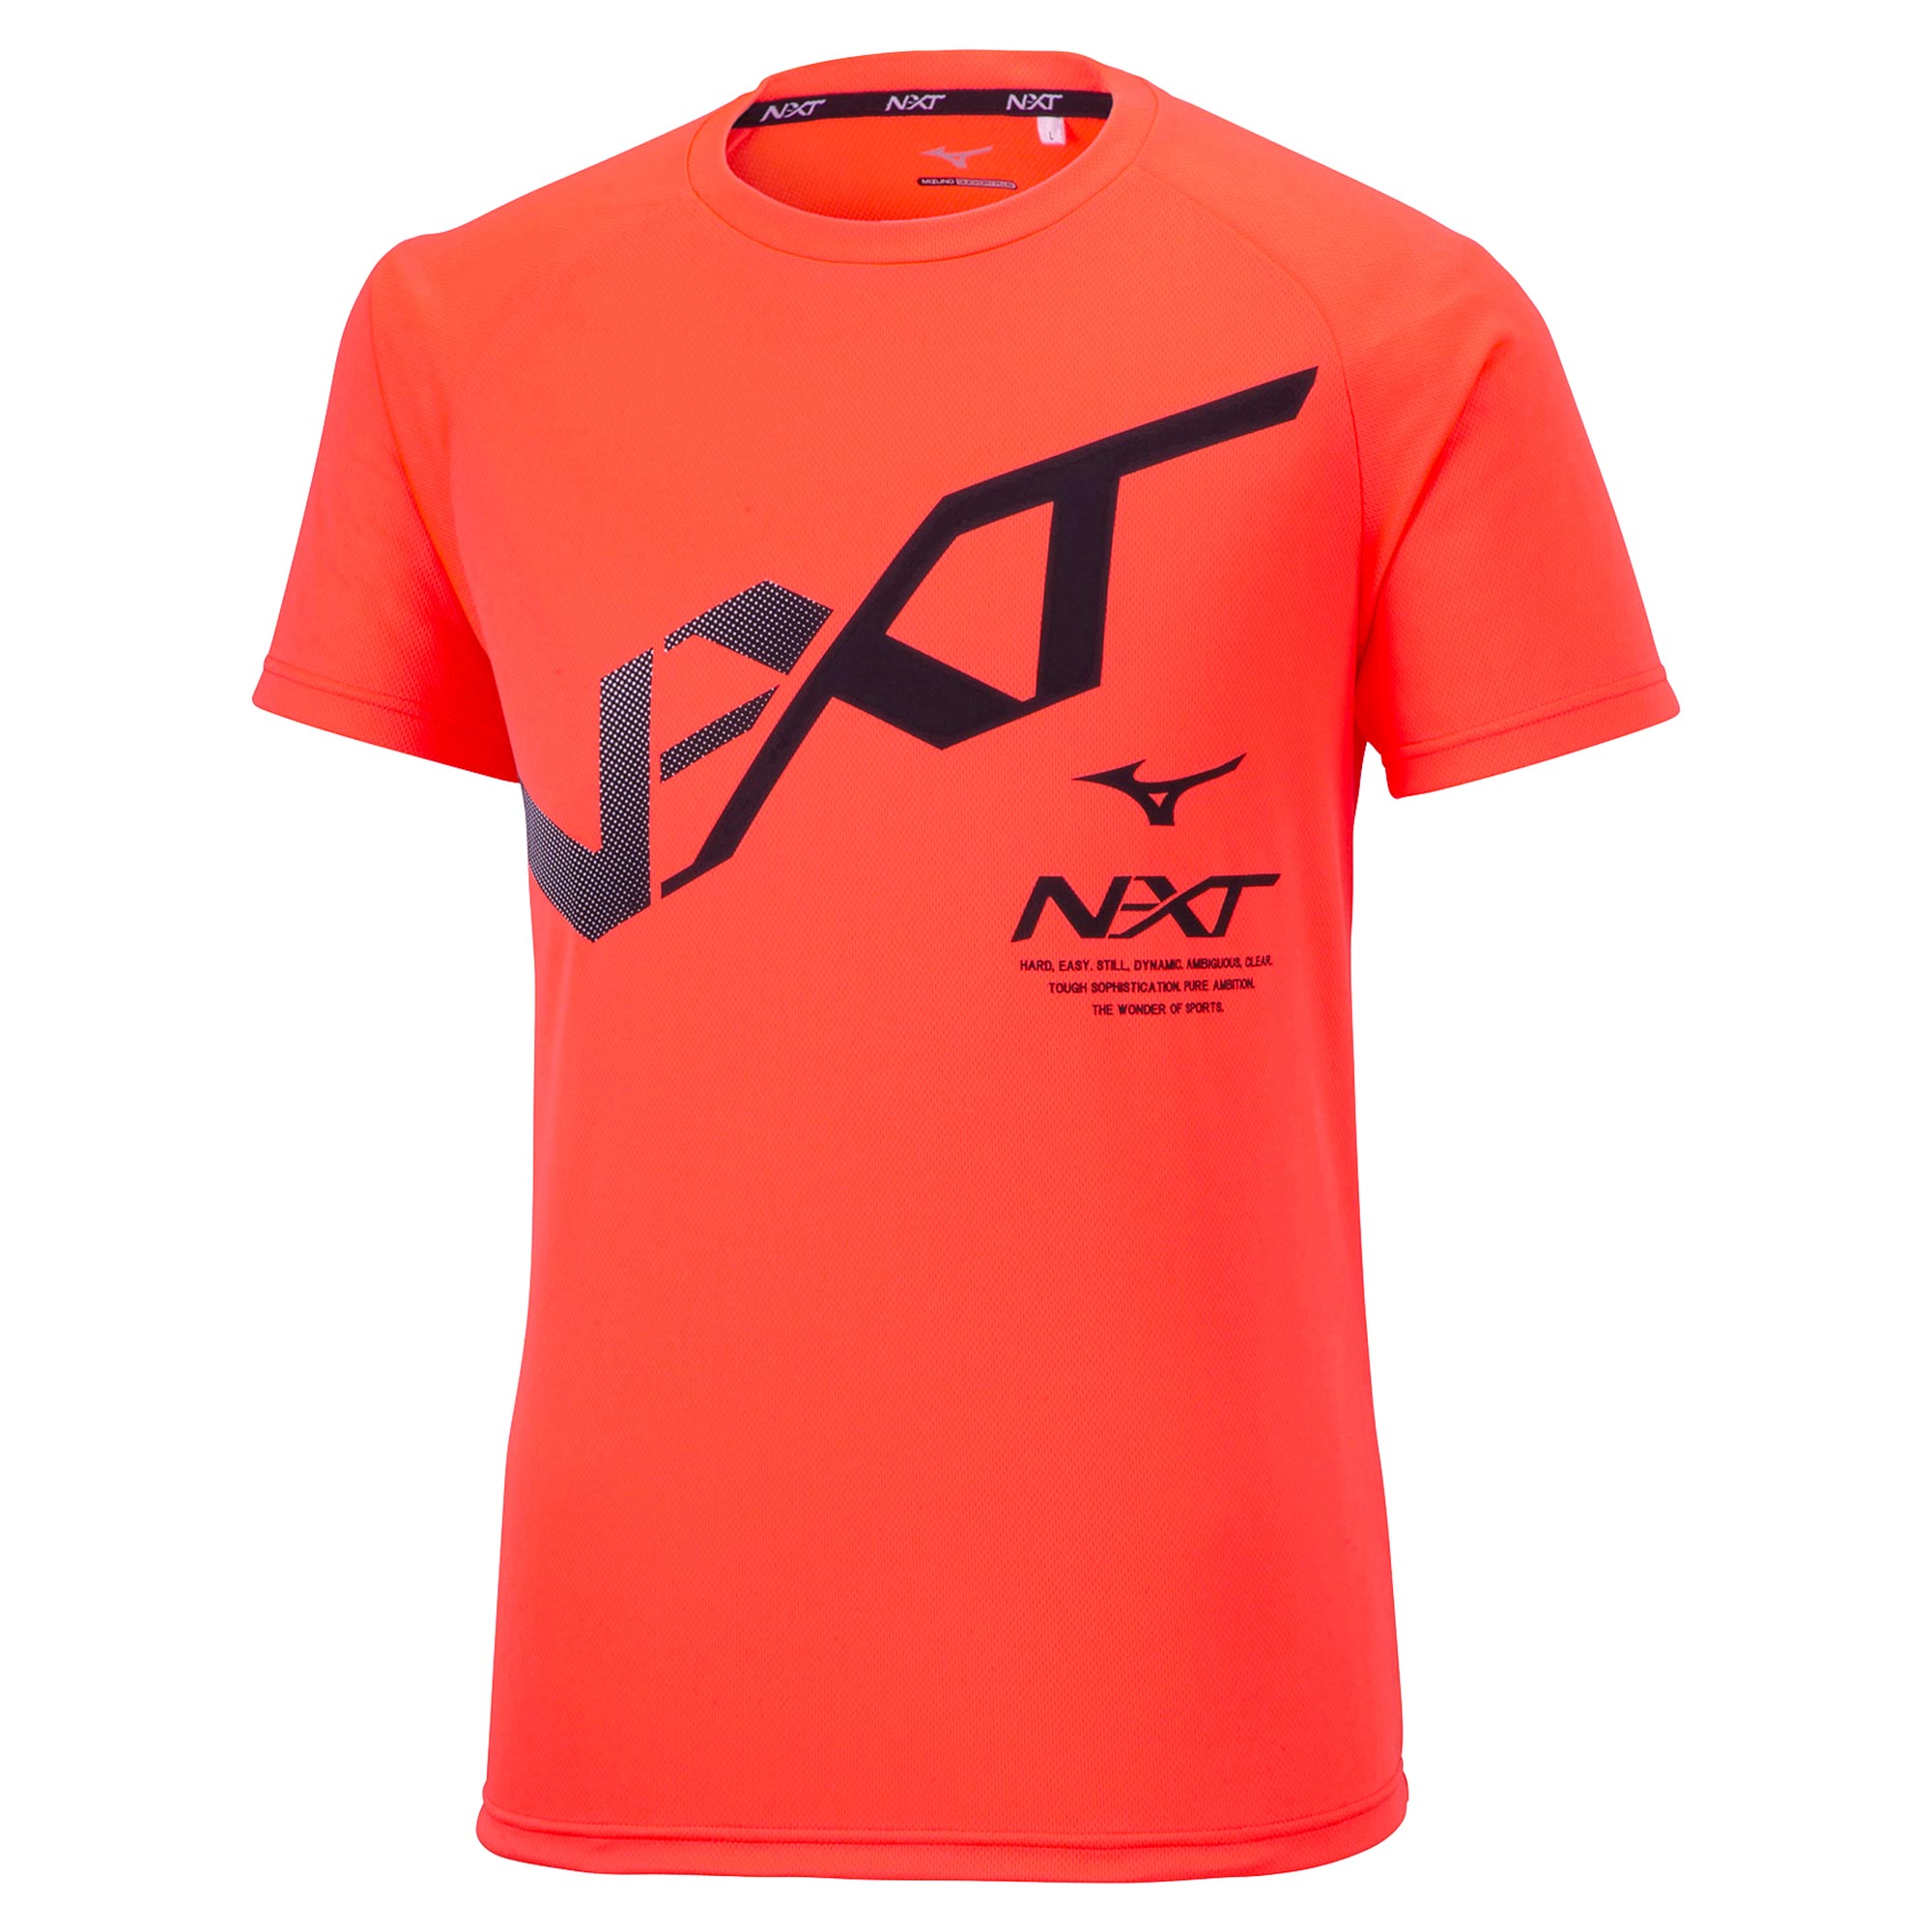 N-XT Tシャツ[ユニセックス]|32JA2215|ミズノトレーニング|トレーニングウエア|ミズノ公式オンライン